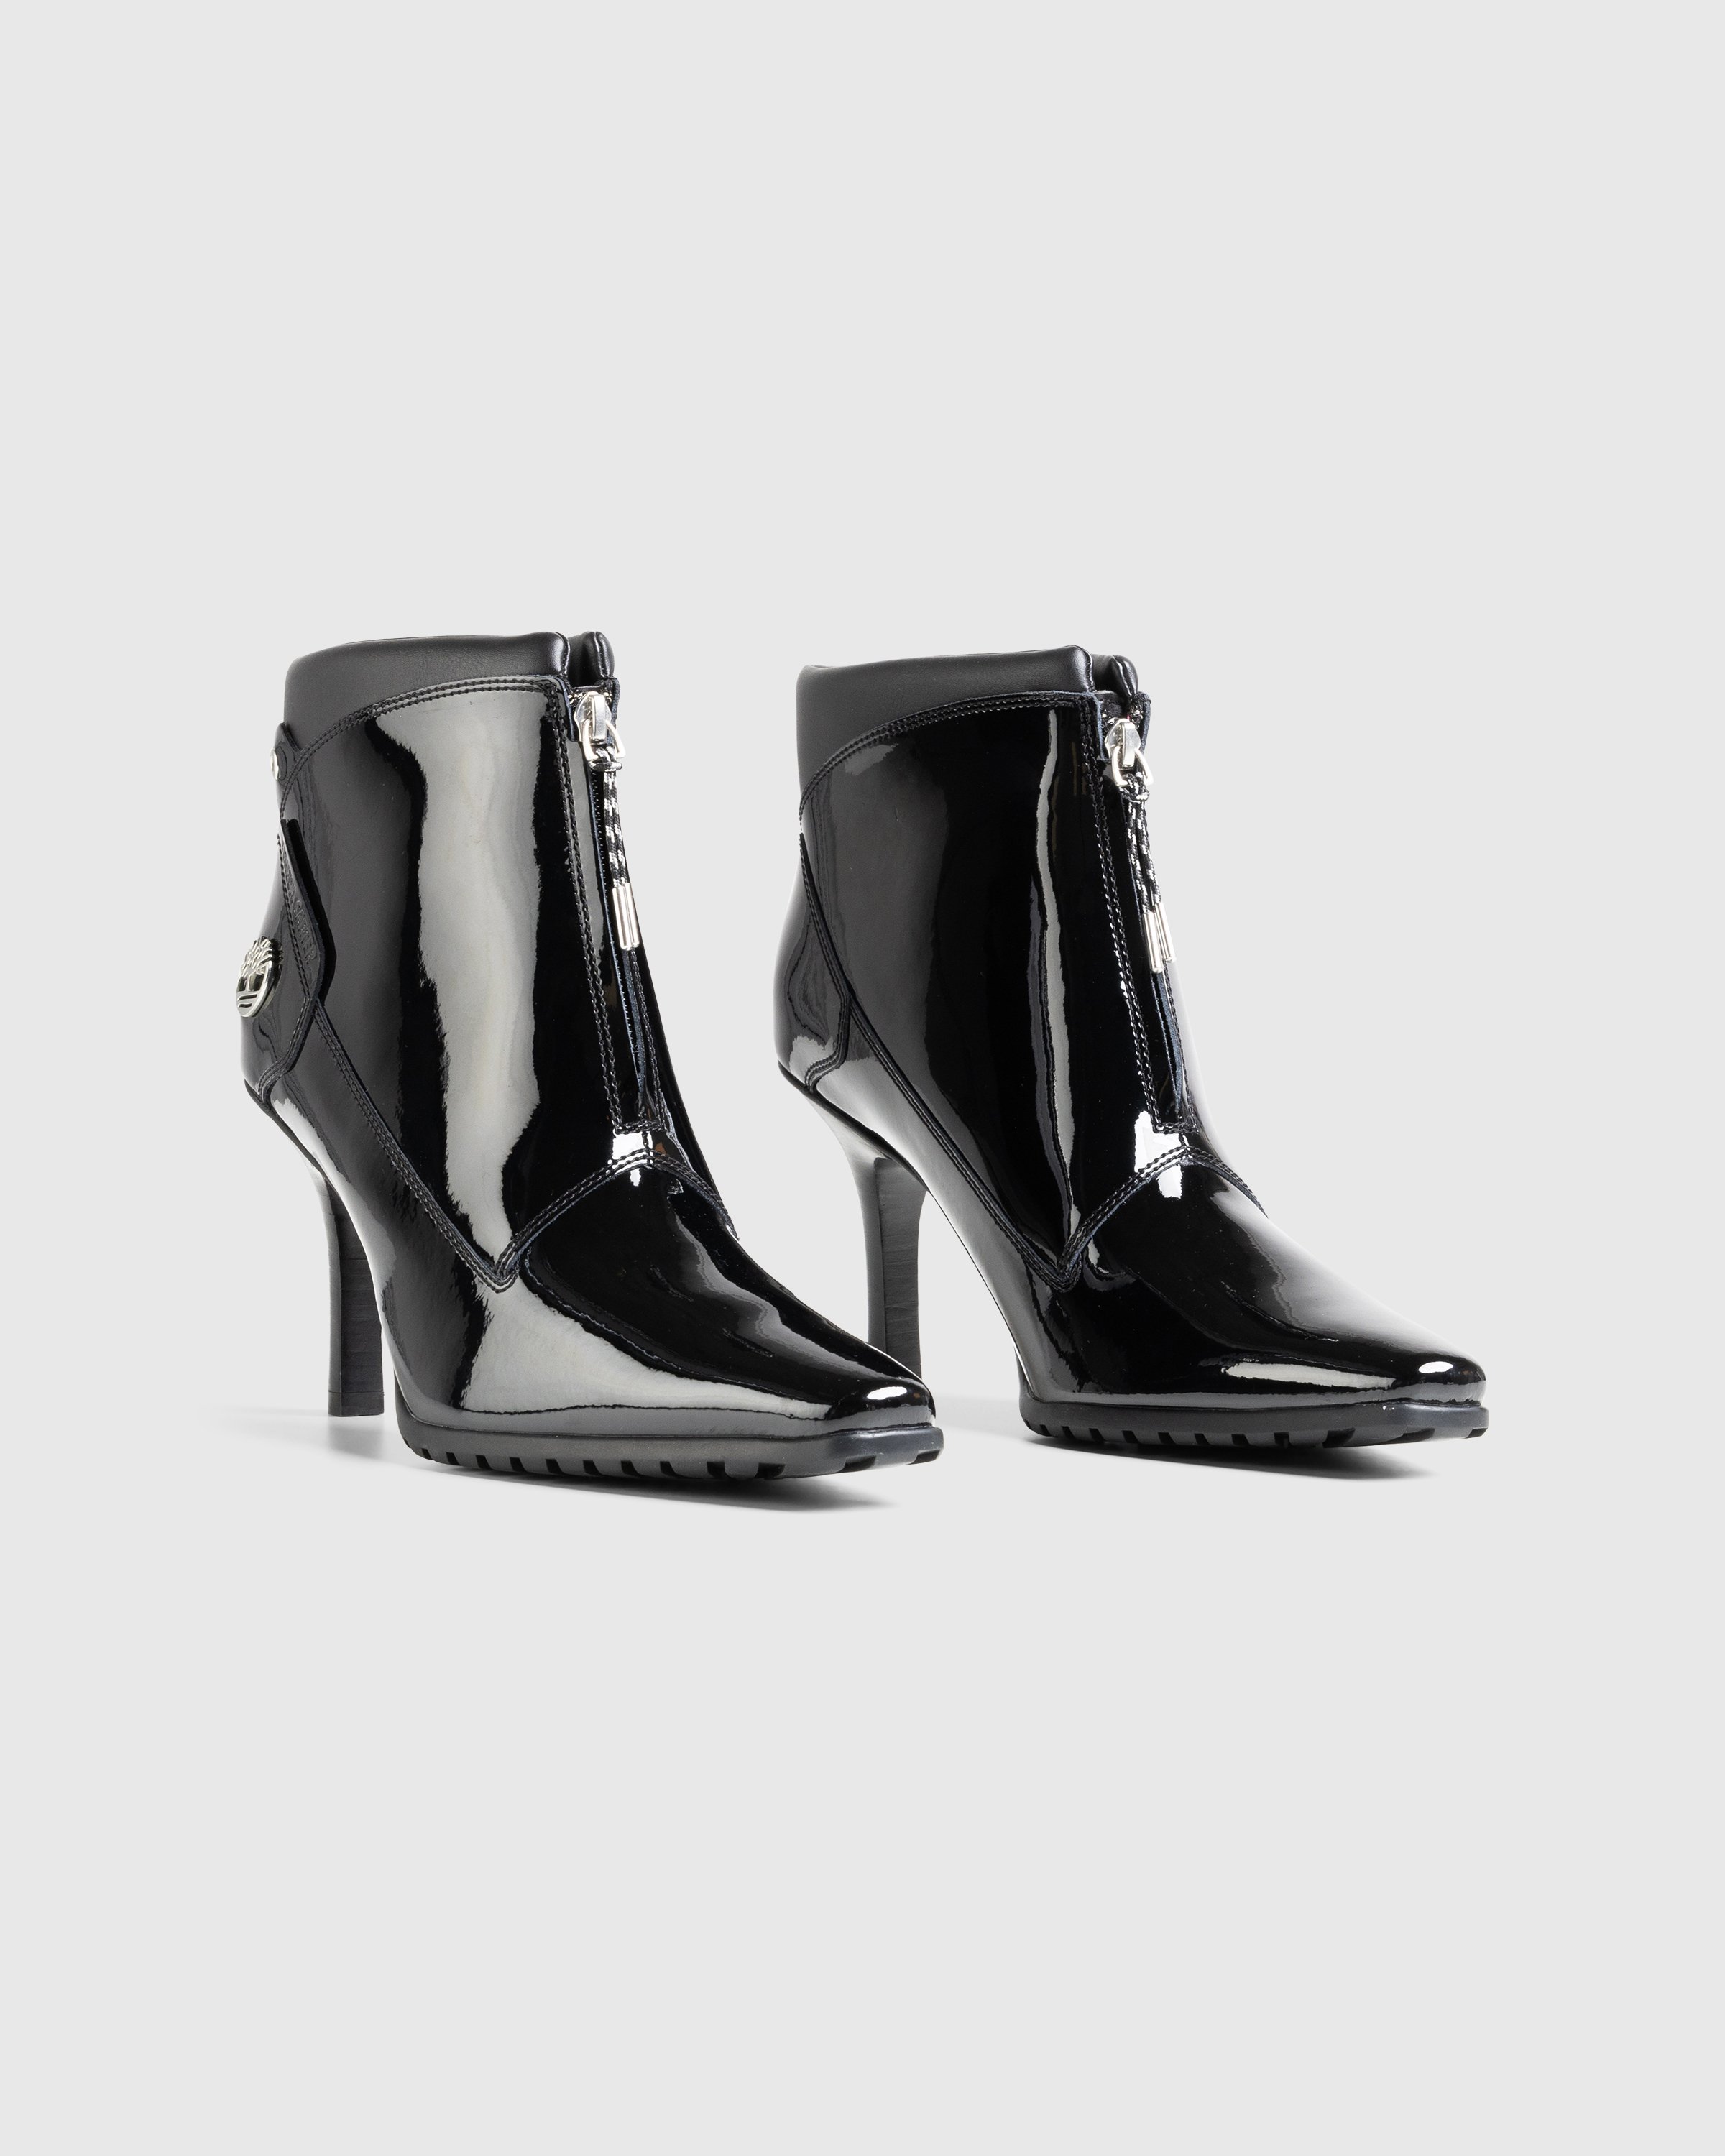 Veneda Carter x Timberland - MID ZIP UP BOOT BLACK PATENT LEATHER - Footwear - Black - Image 3